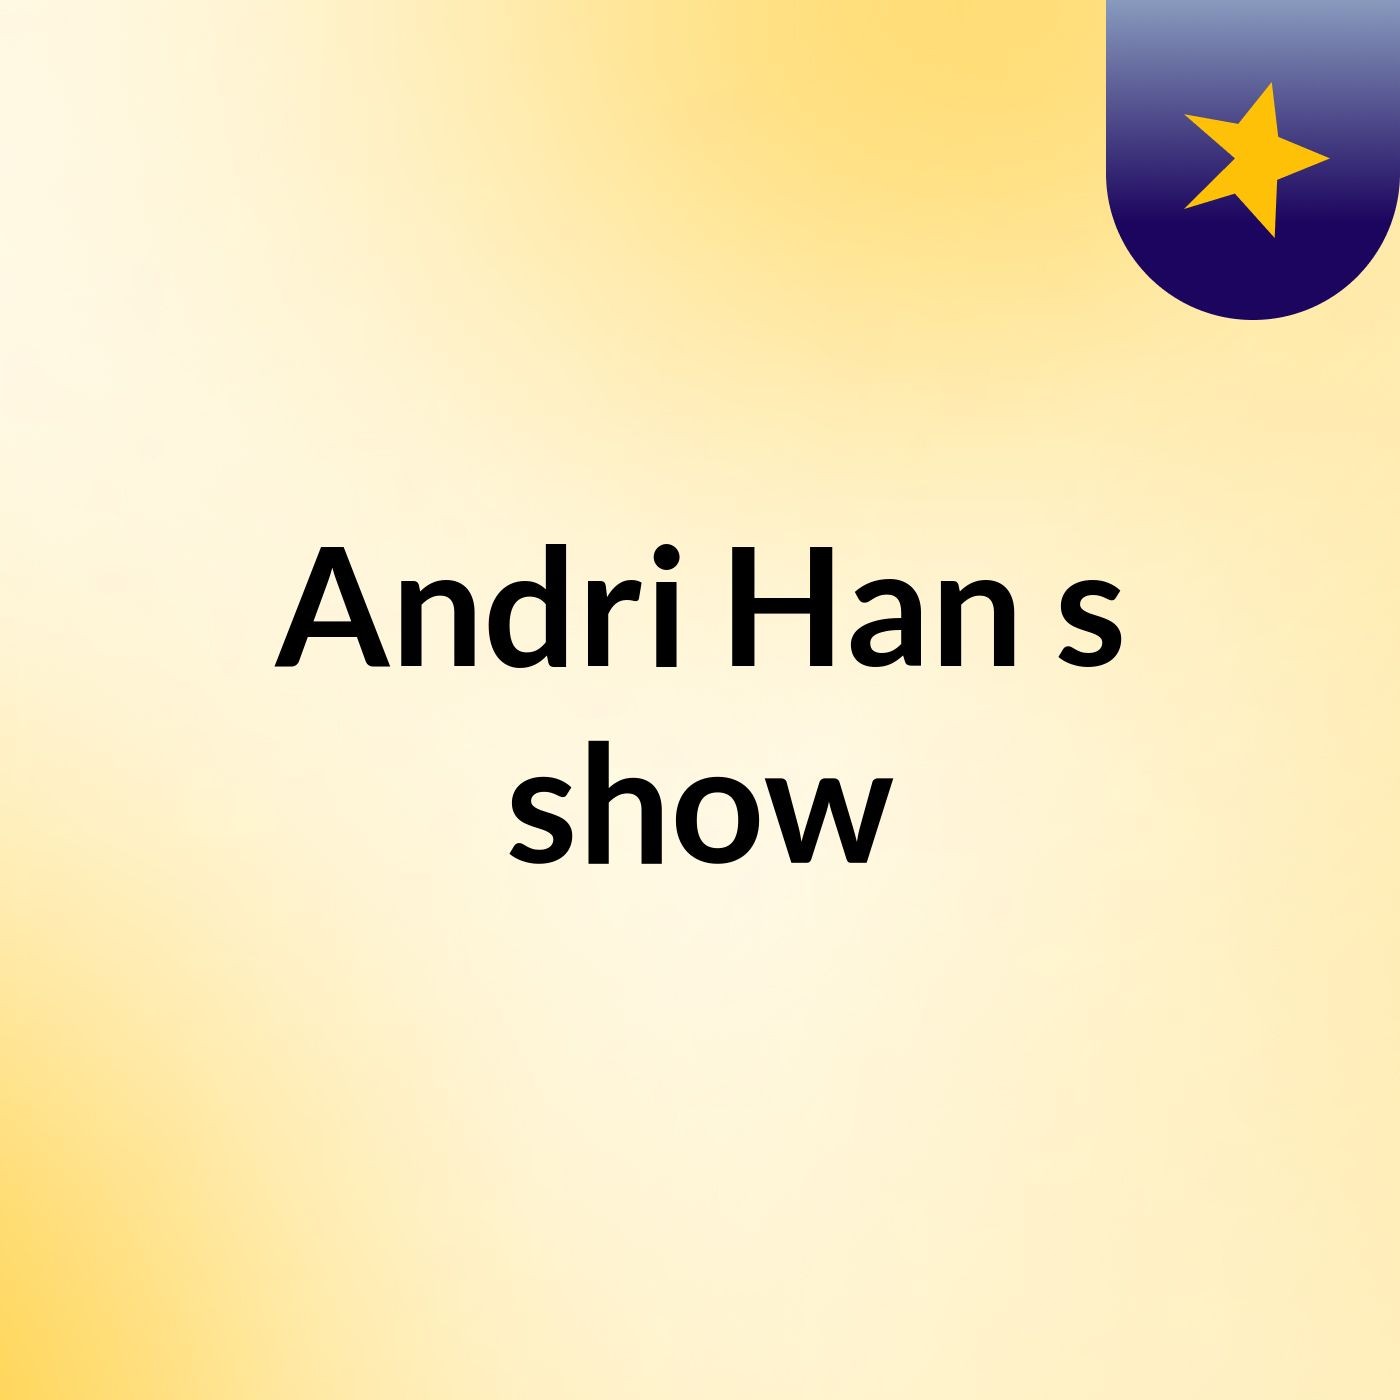 Andri Han's show